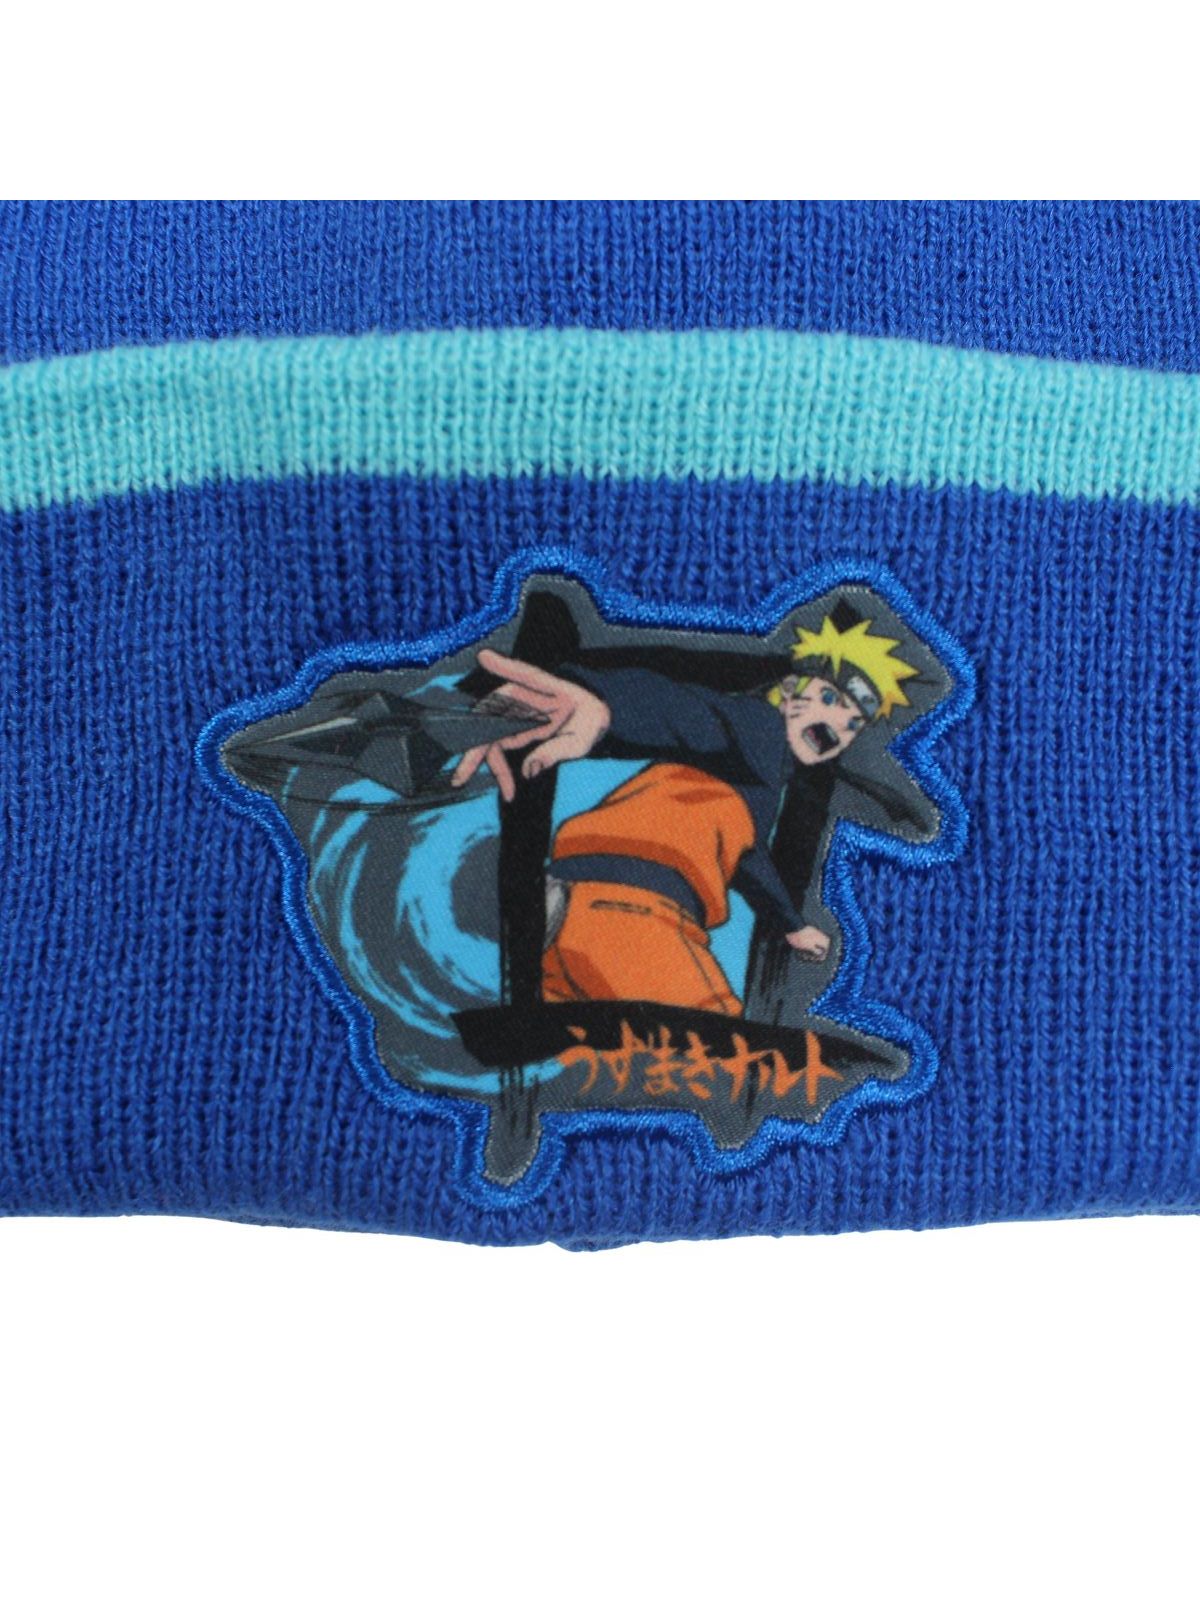 Naruto Glove Hat Nack warmer